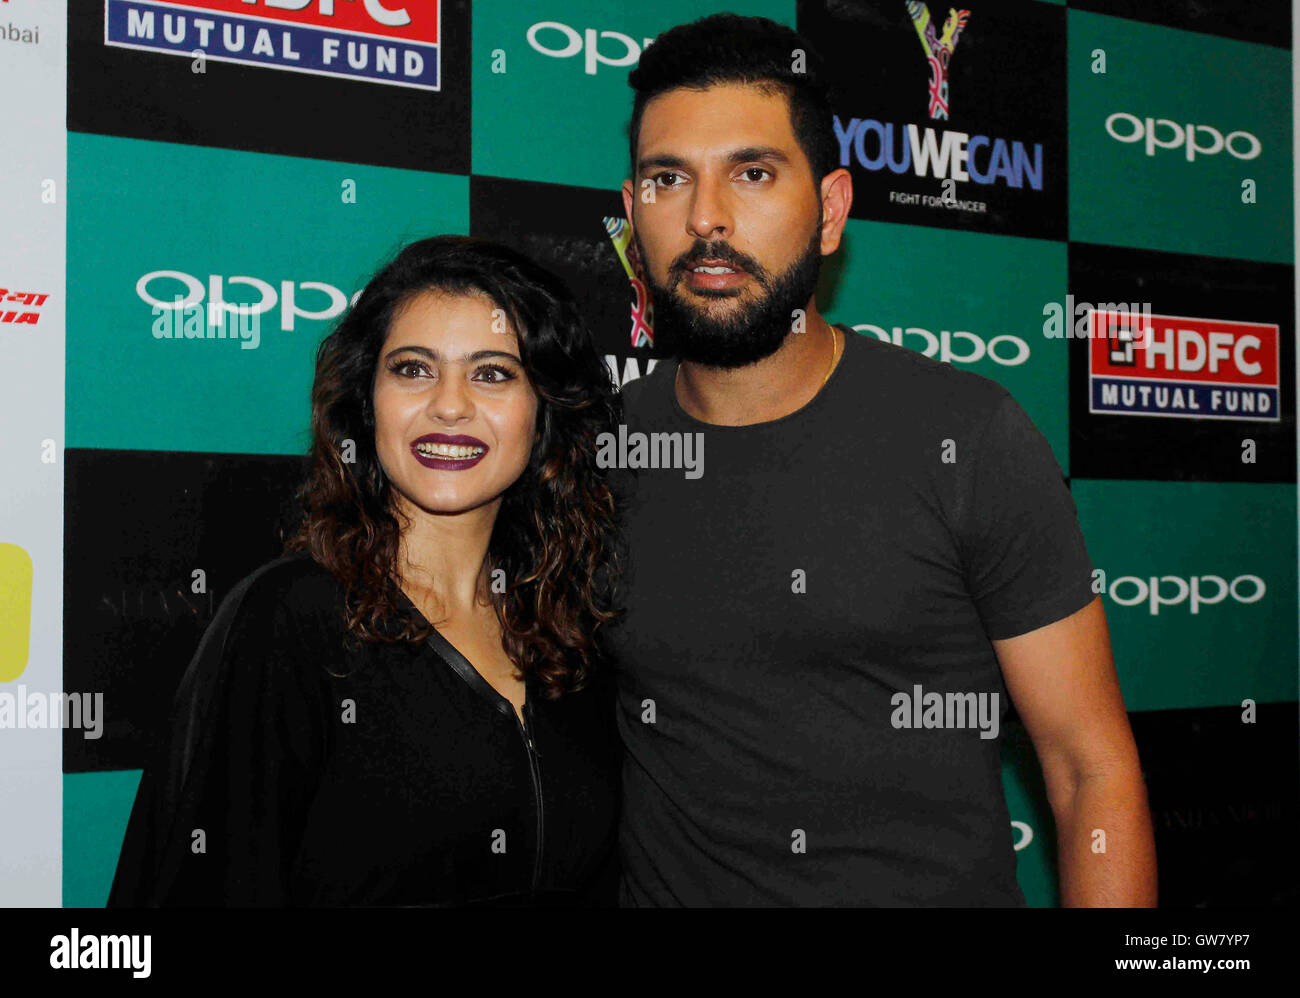 Indian cricket player Yuvraj Singh Bollywood actor Kajol launch clothing brand YWC designed Shantanu Nikhil Mumbai Stock Photo